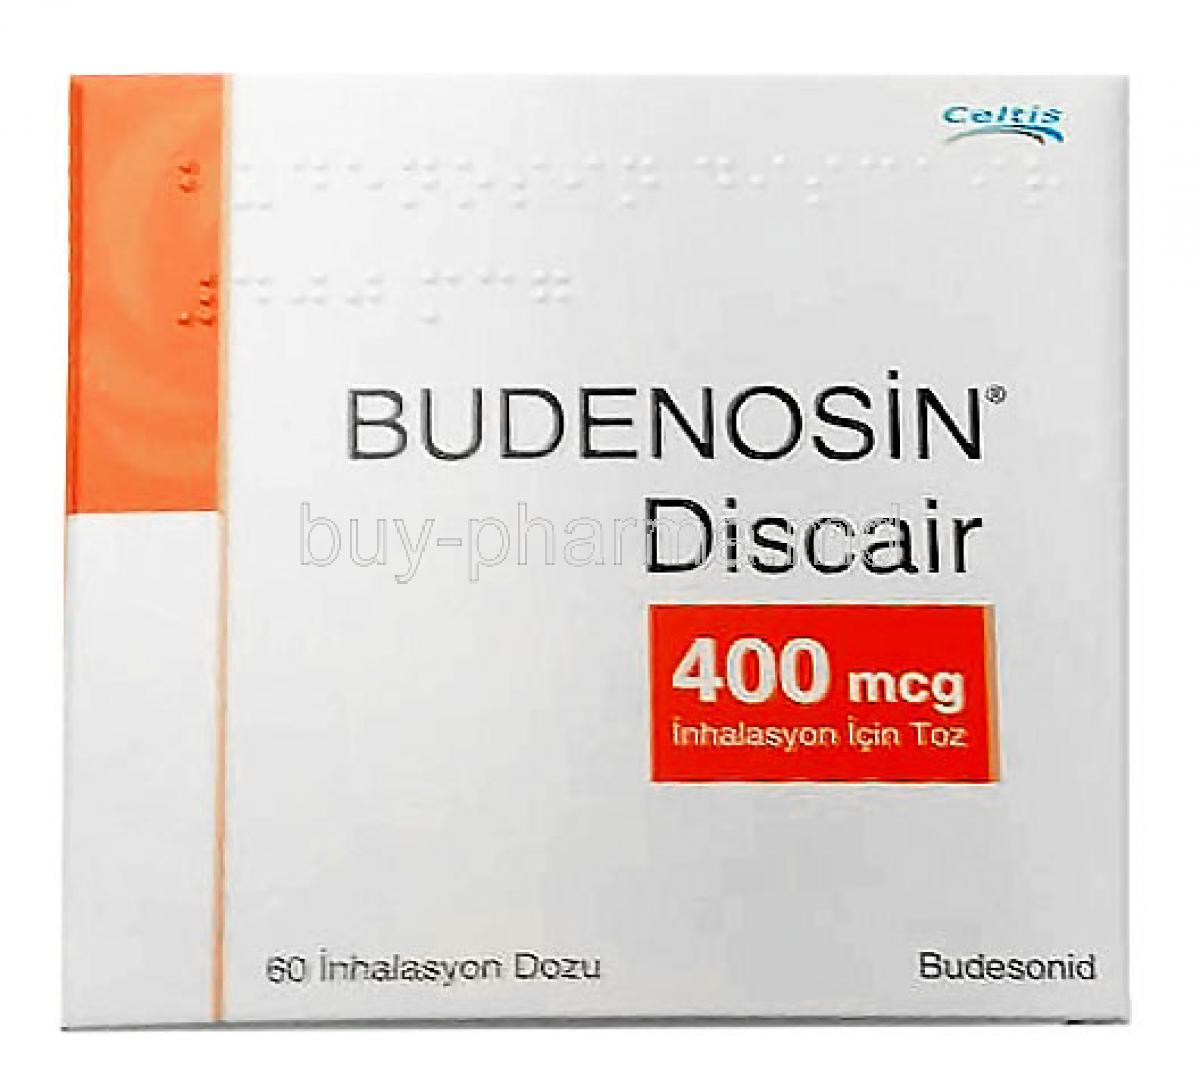 Budenosin Discair Inhaler, Budesonide 400 mcg, 60 doses Inhaler, Celtis İlaç San. Ve Tic. A.Ş, Box front view